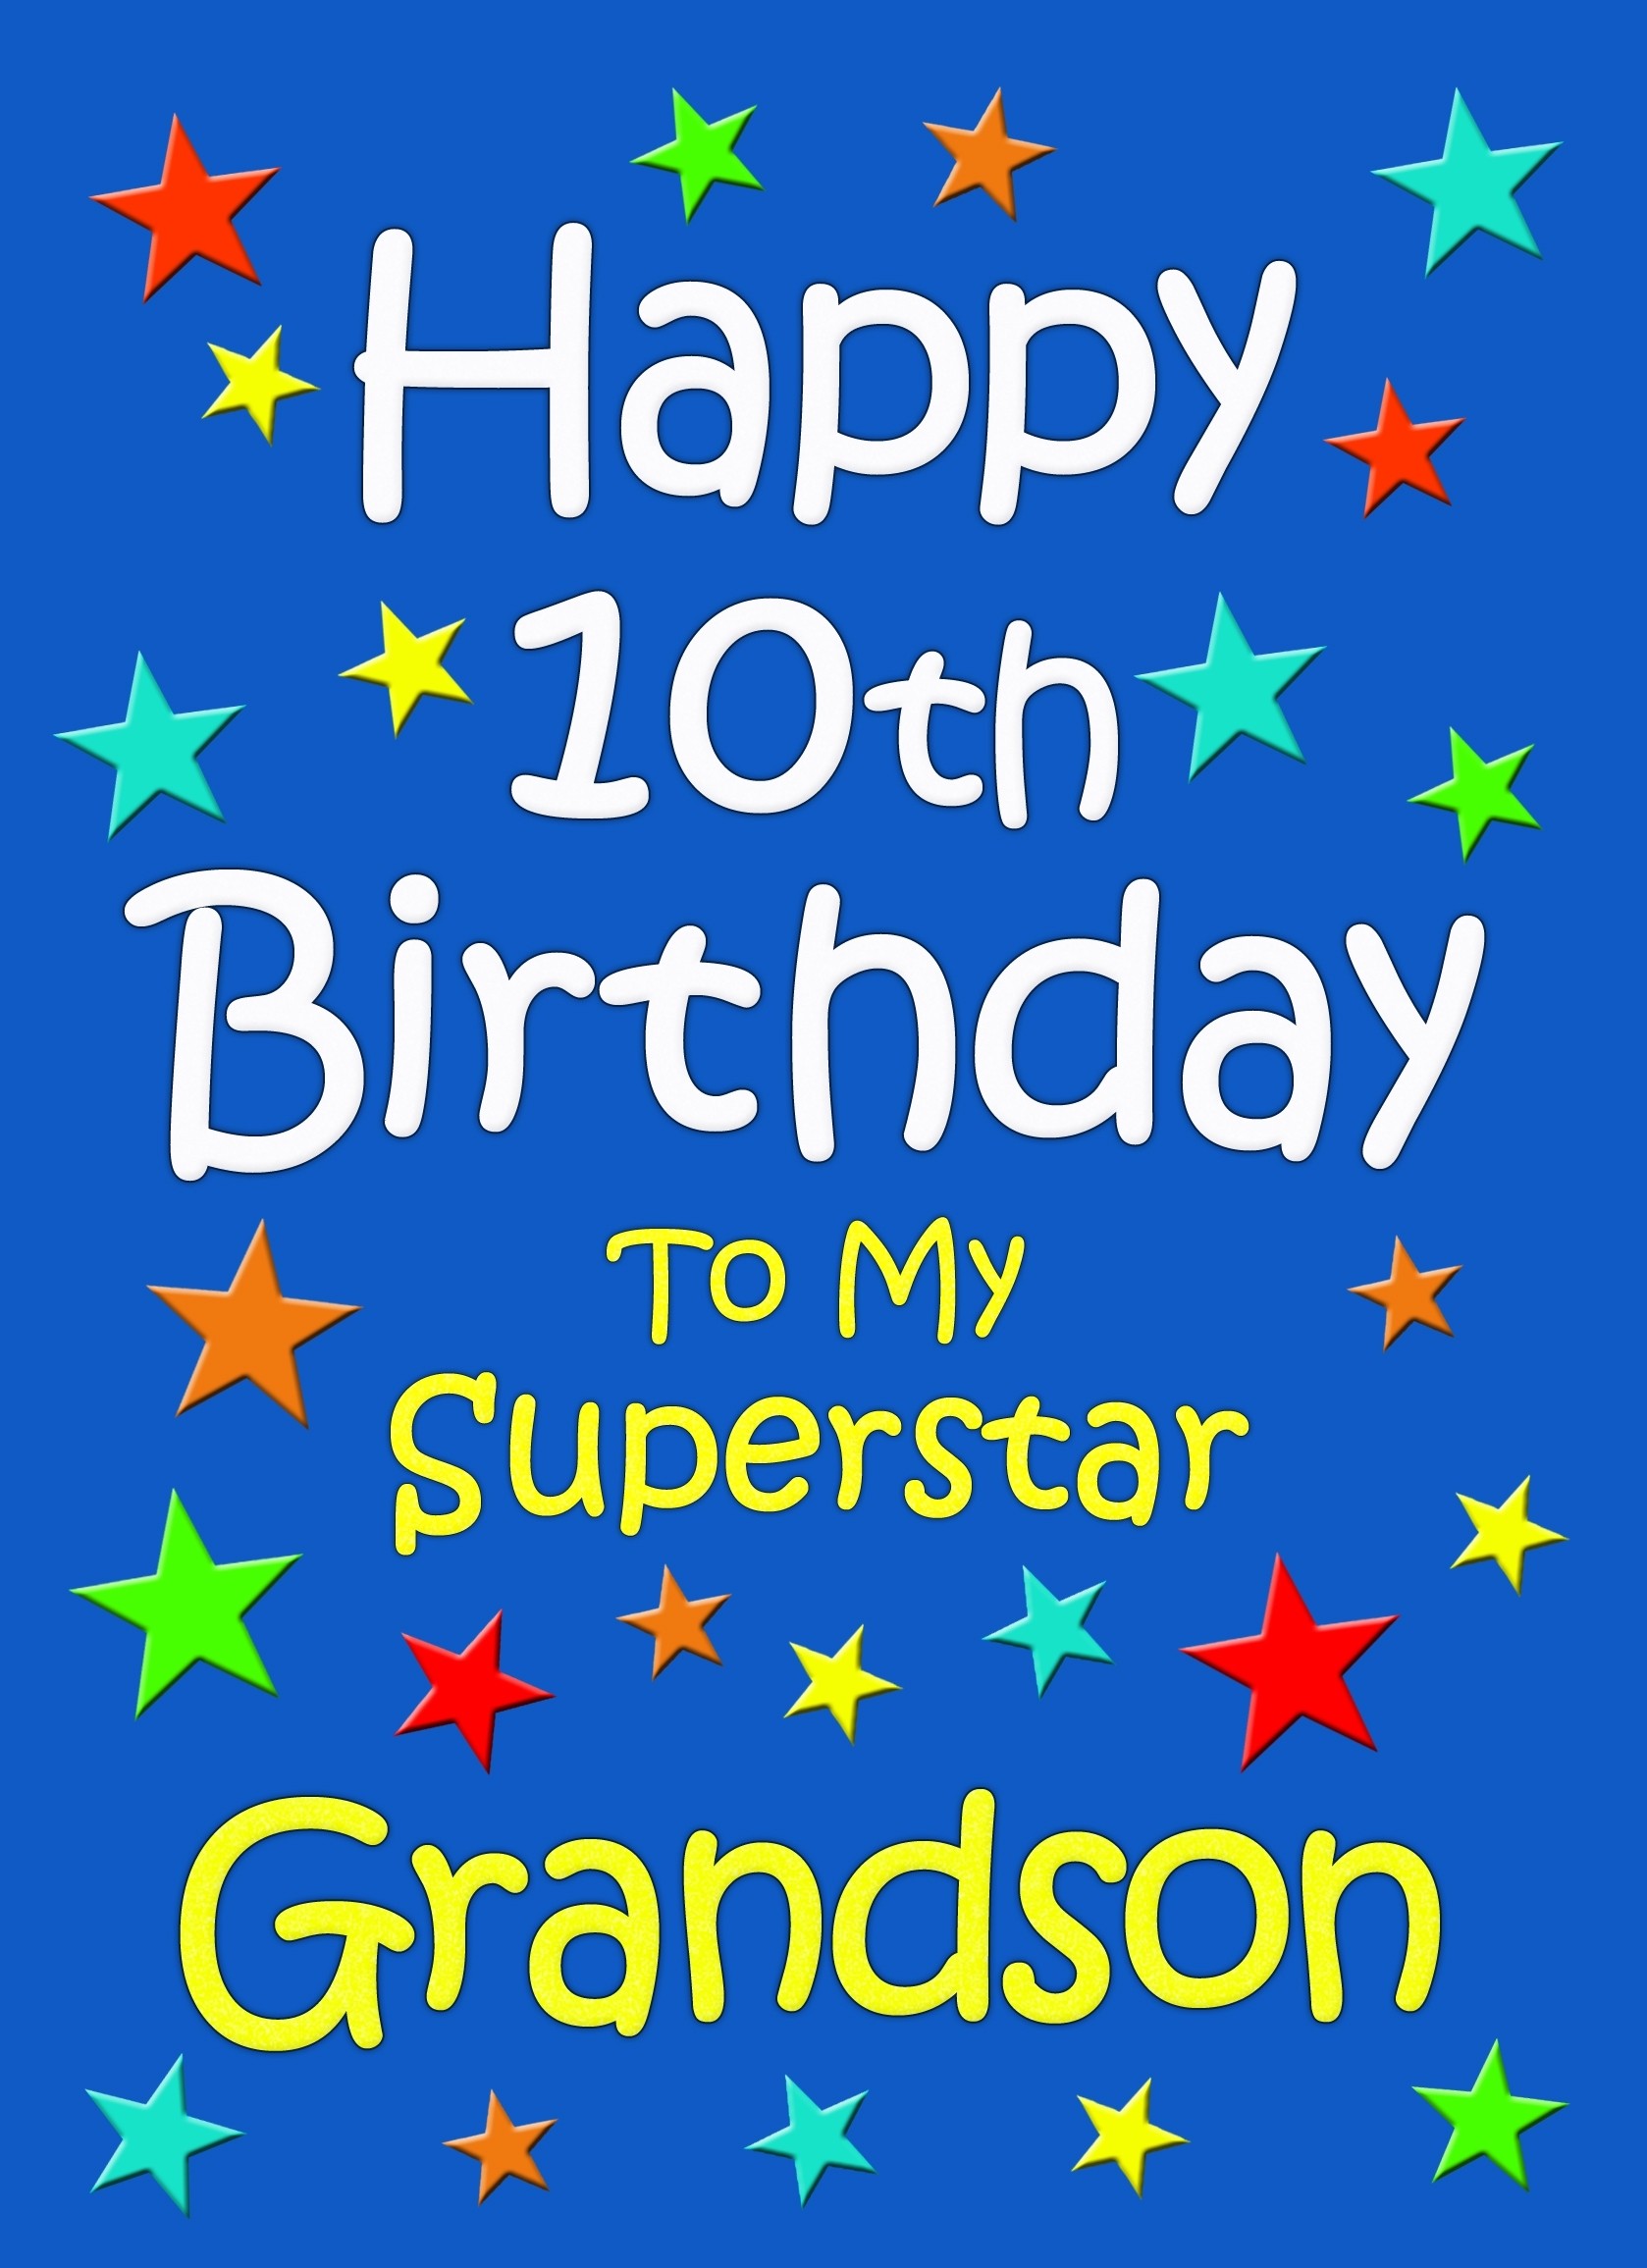 Grandson 10th Birthday Card (Blue)